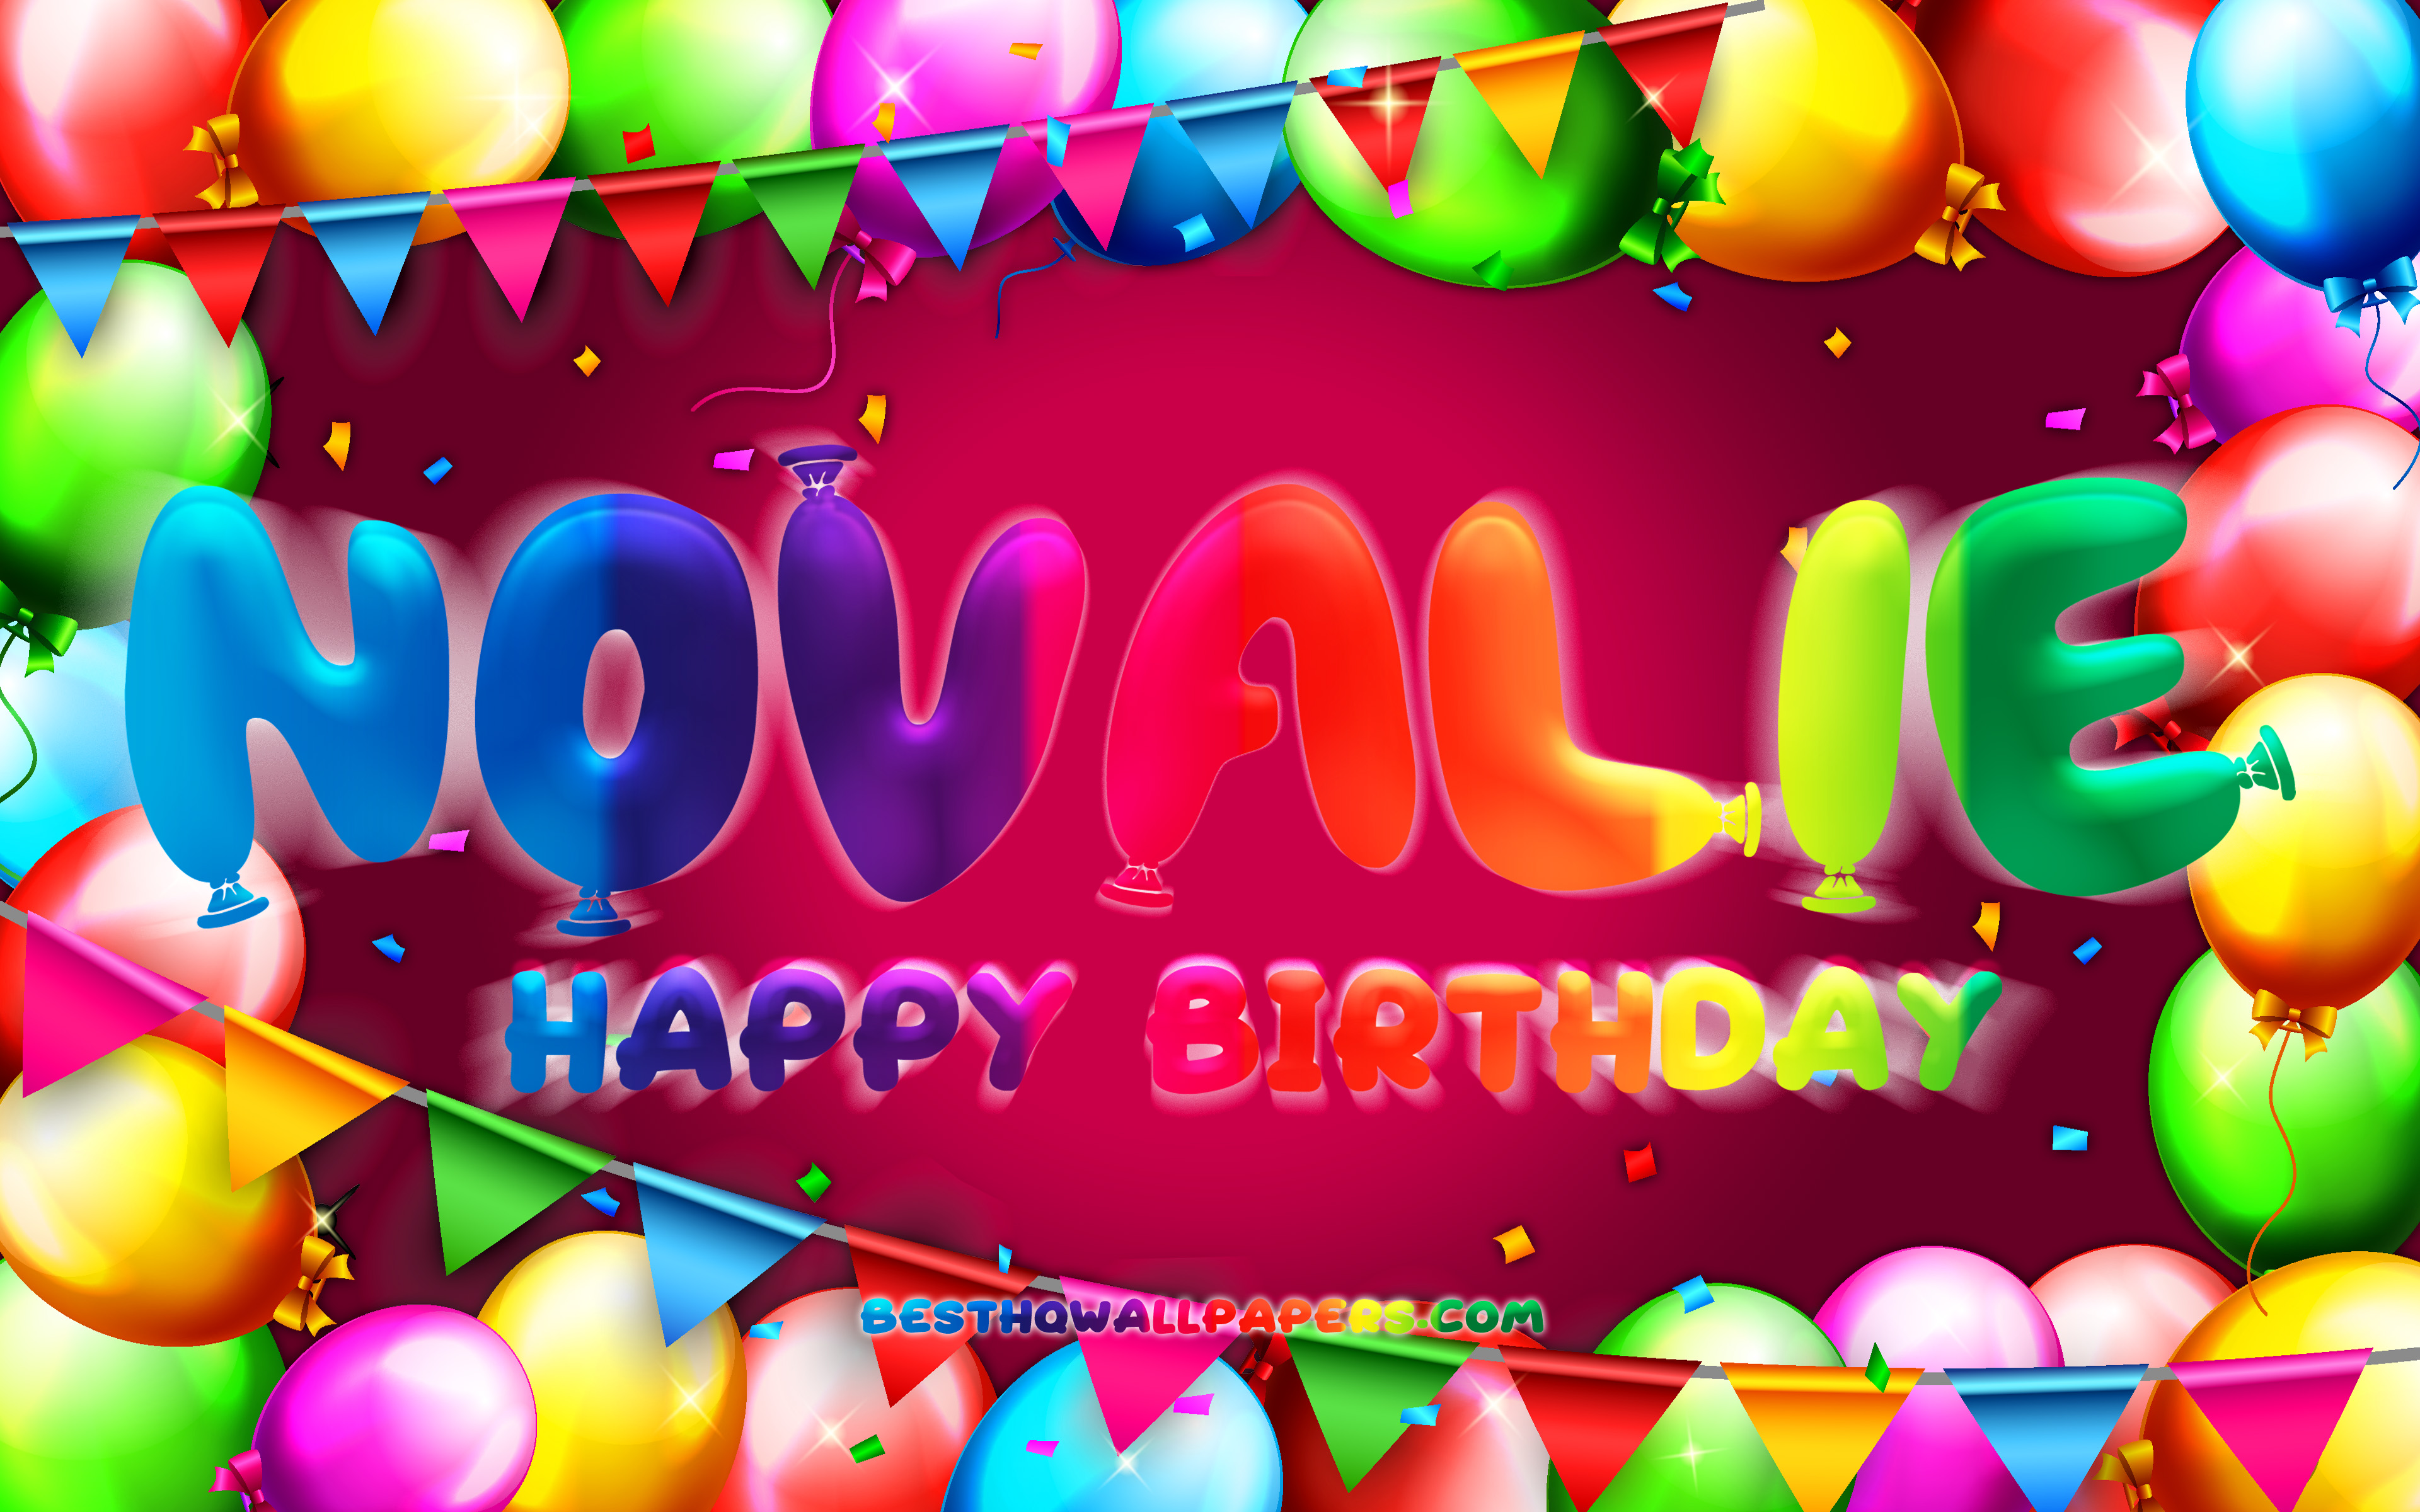 Happy Birthday Novalie, 4k, colorful balloon frame, Novalie name, purple ba...